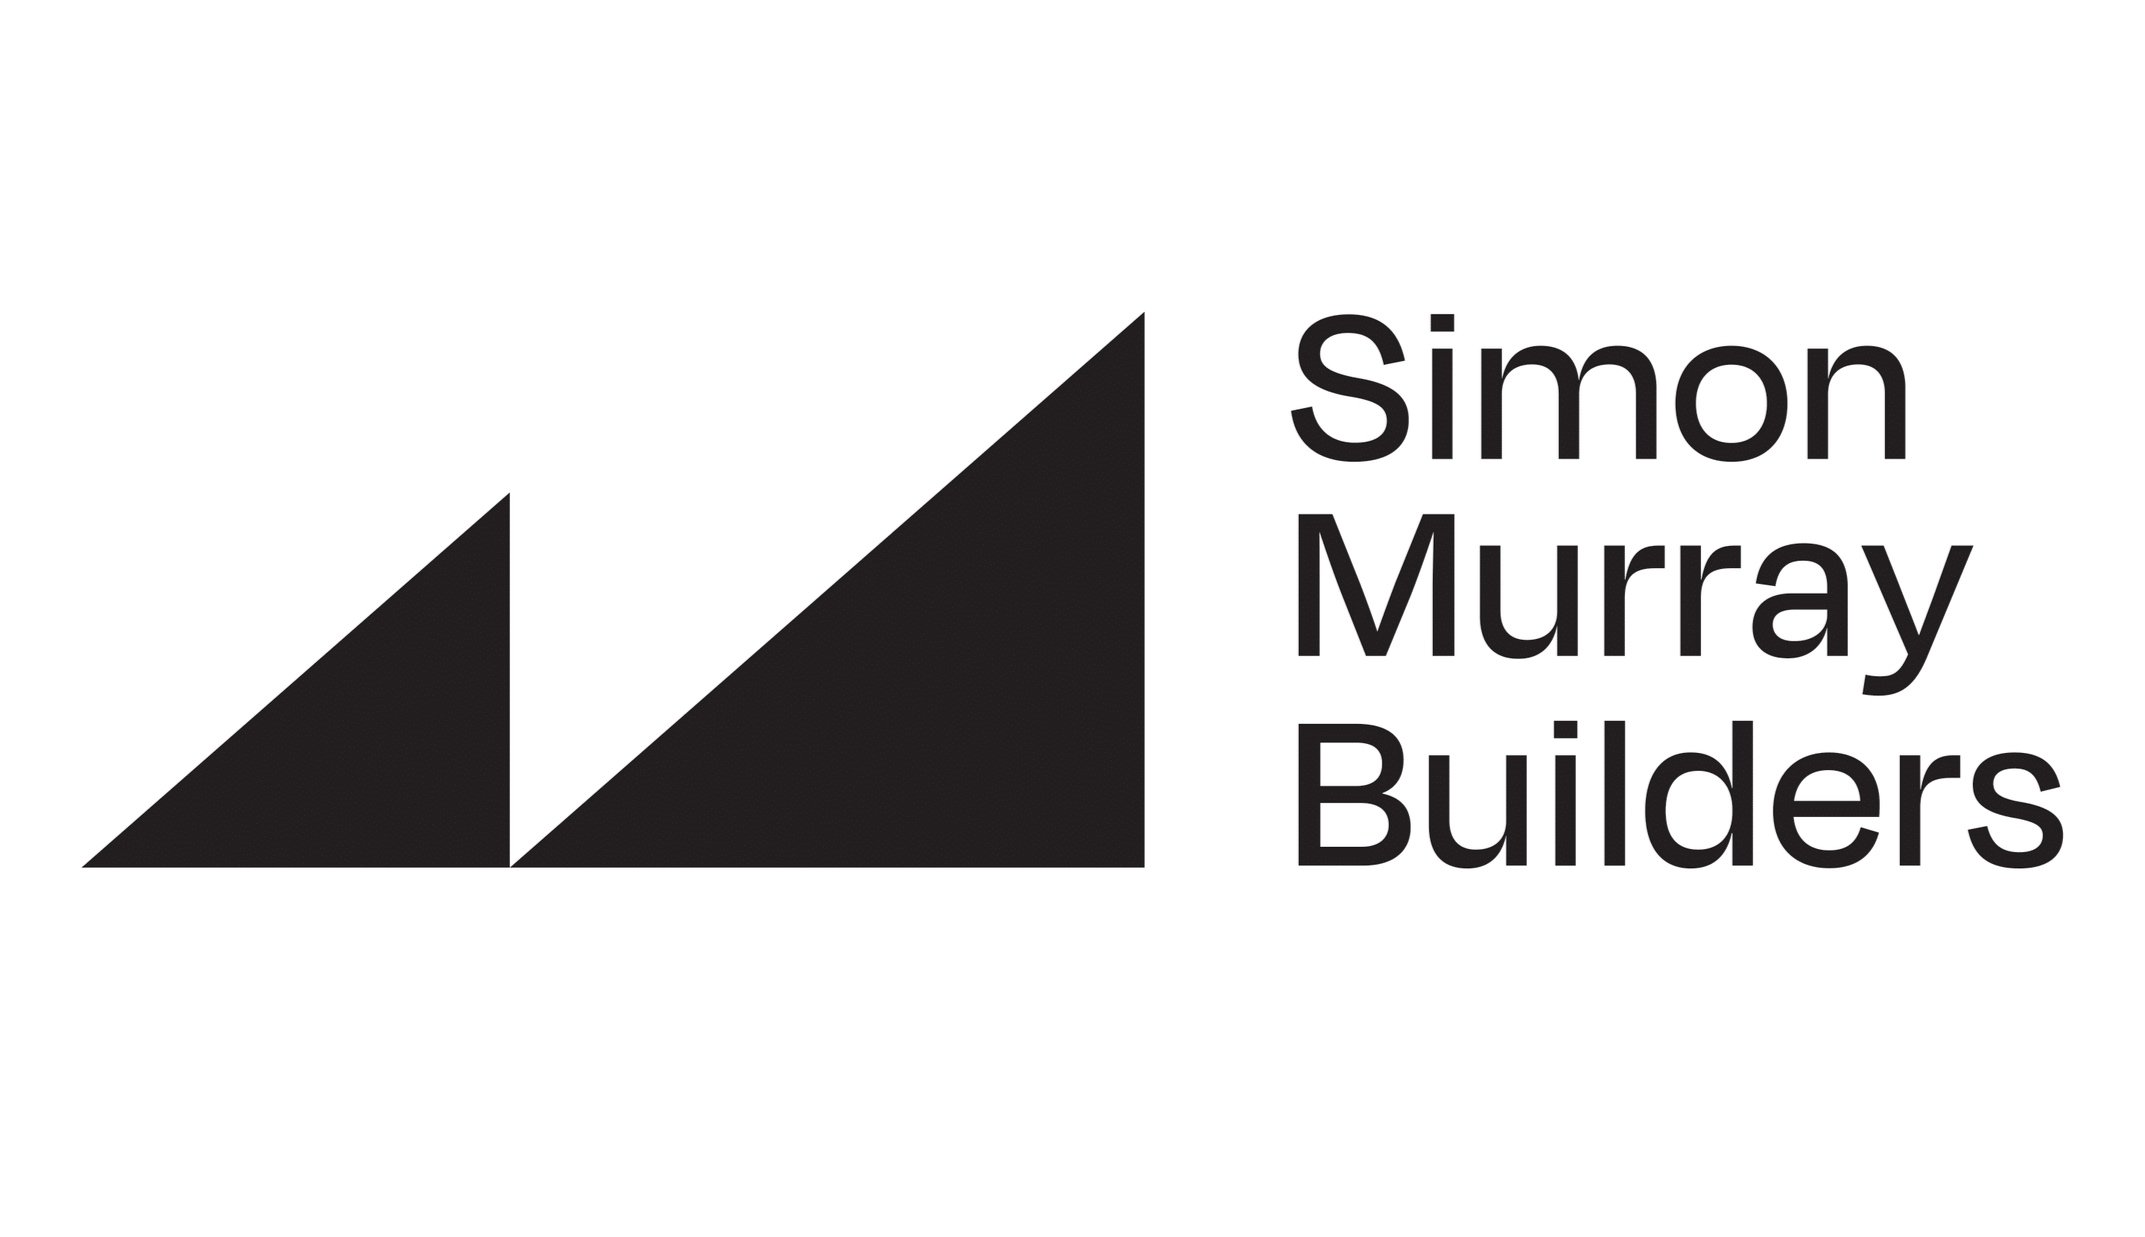 Simon Murray Builders